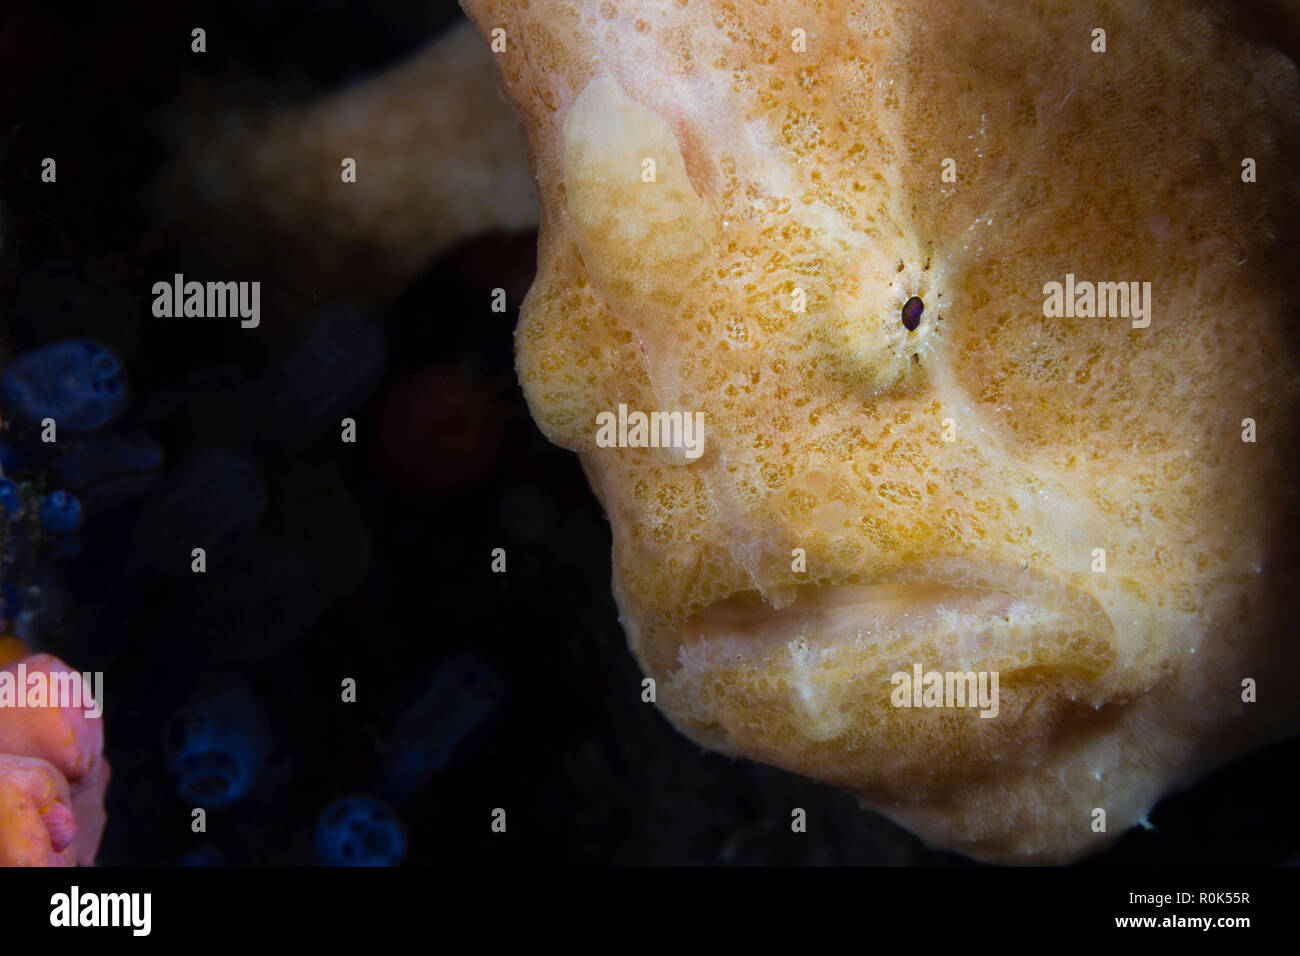 Longlure frogfish, Anilao, Philippines. Stock Photo